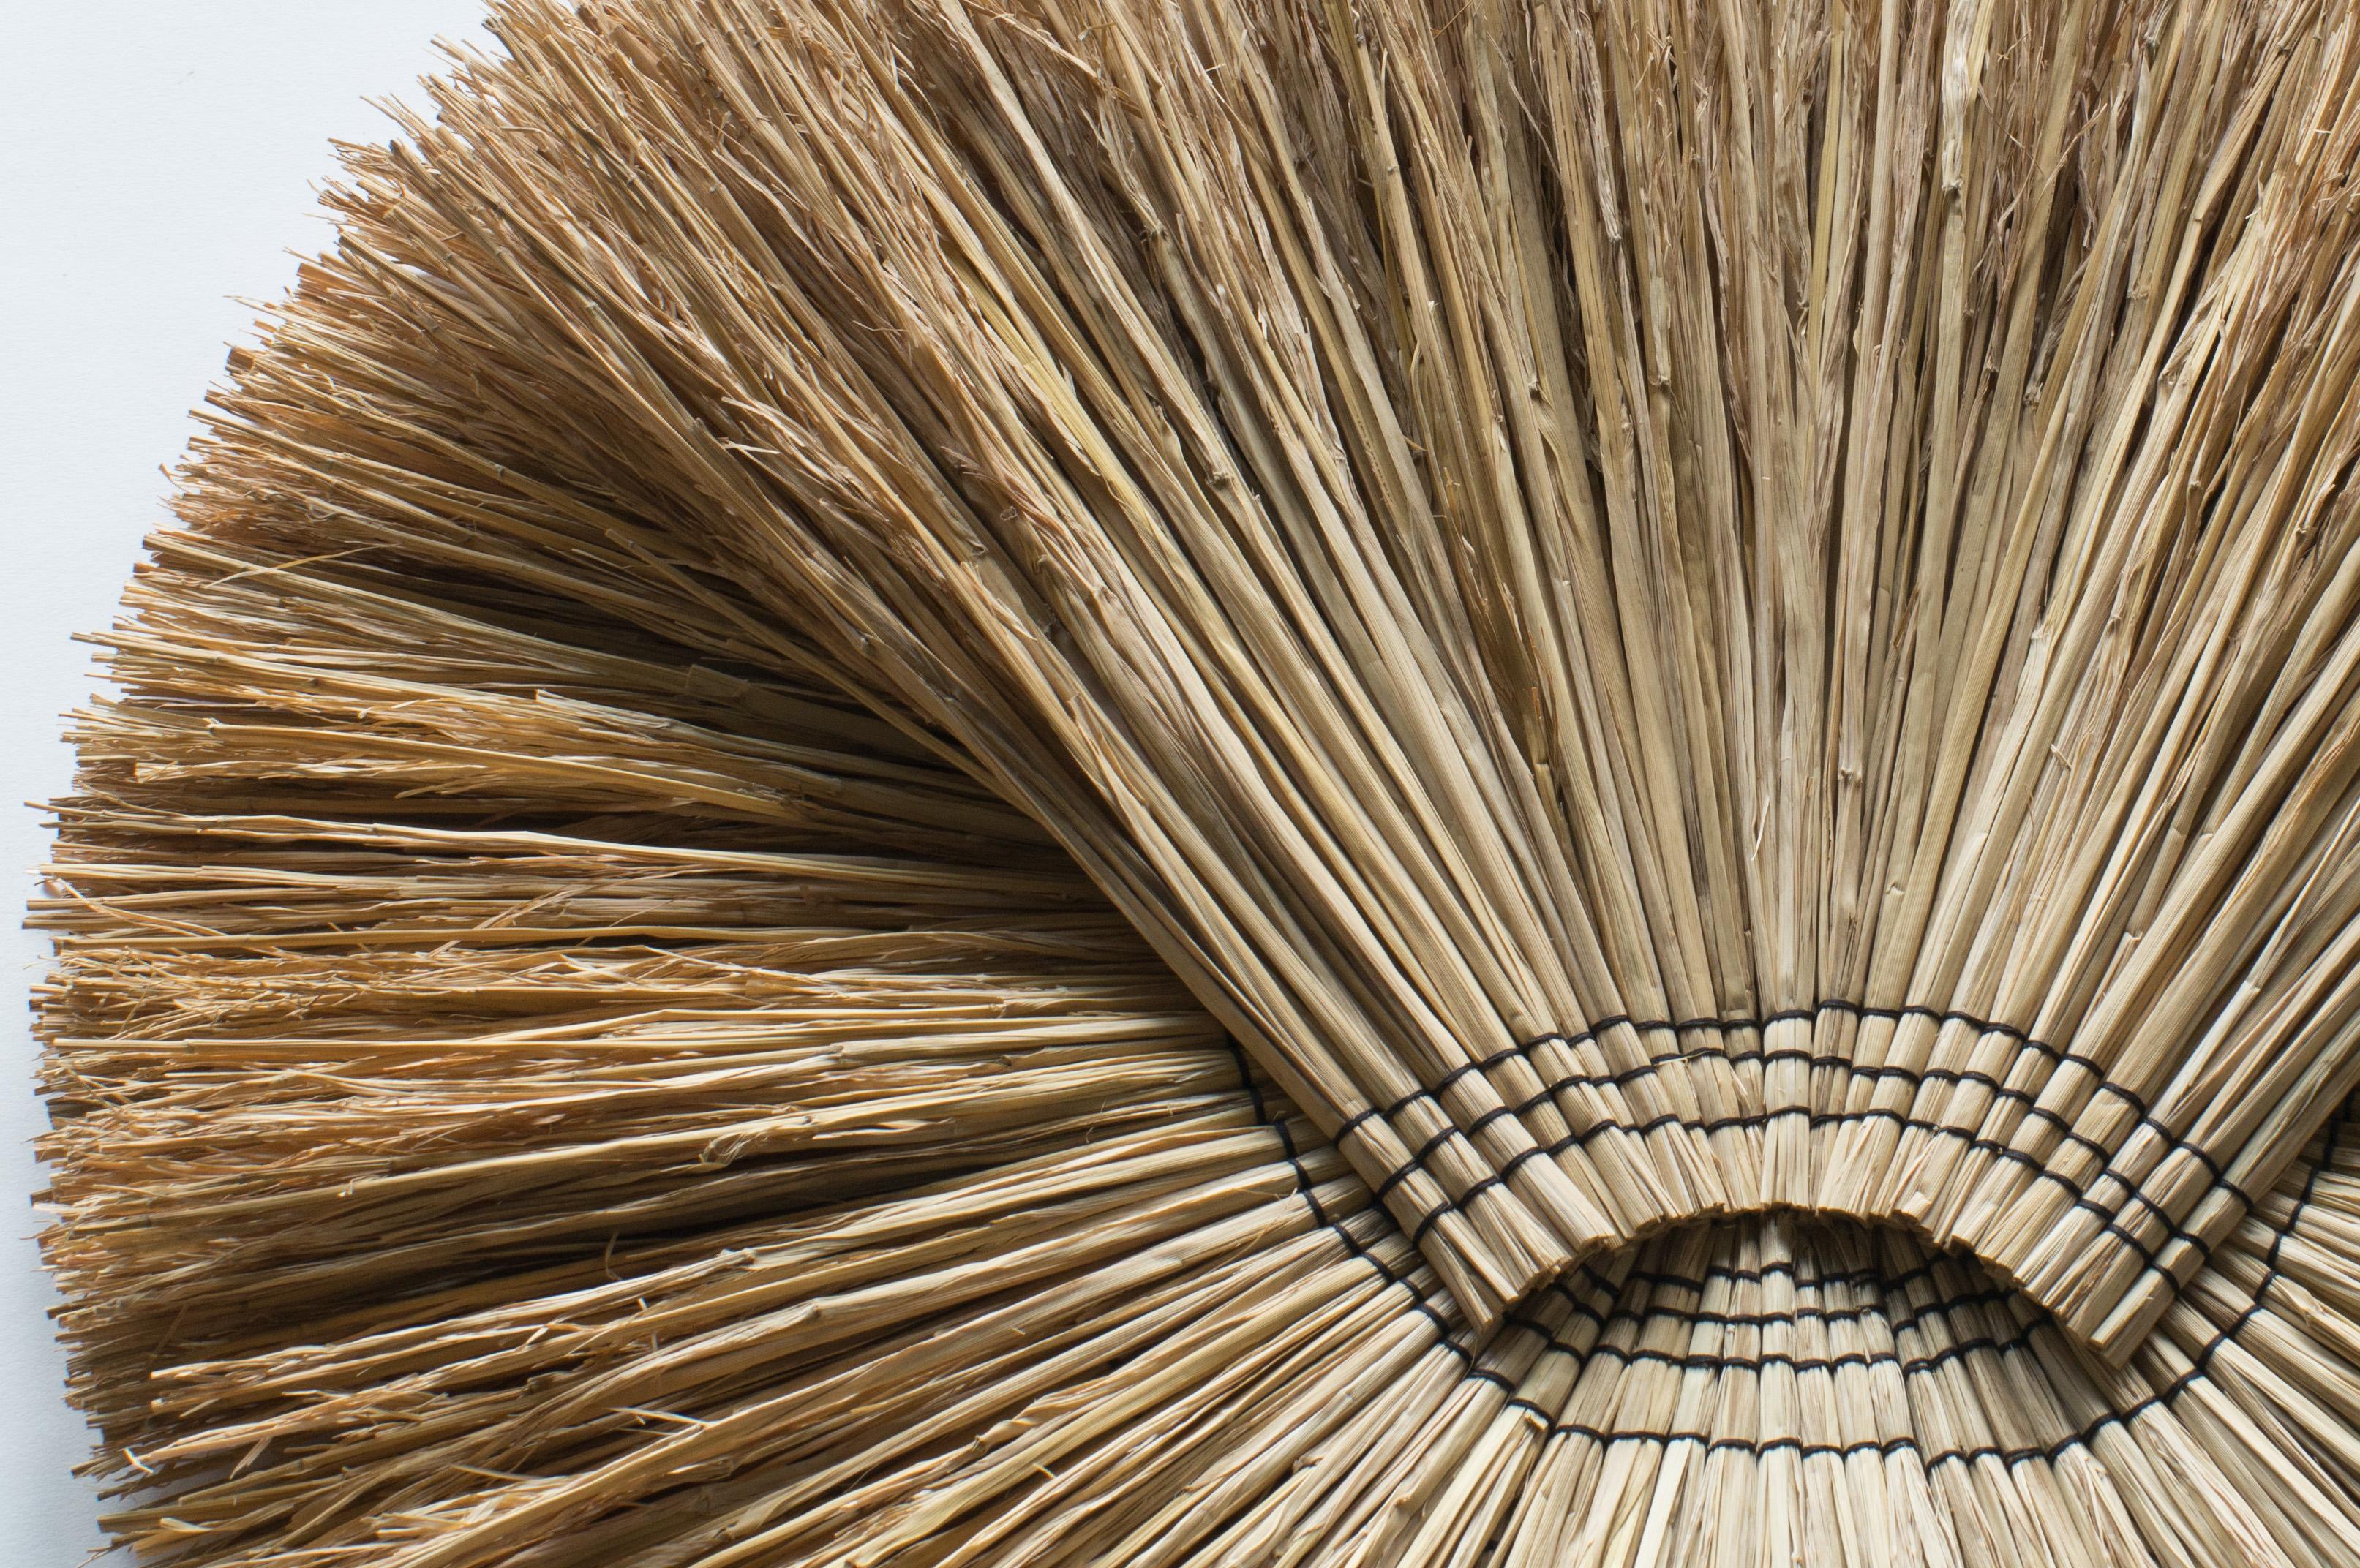 Japanese Arko Wall Art2  Tribal Style, Contemporary Art Craft Rice Straw